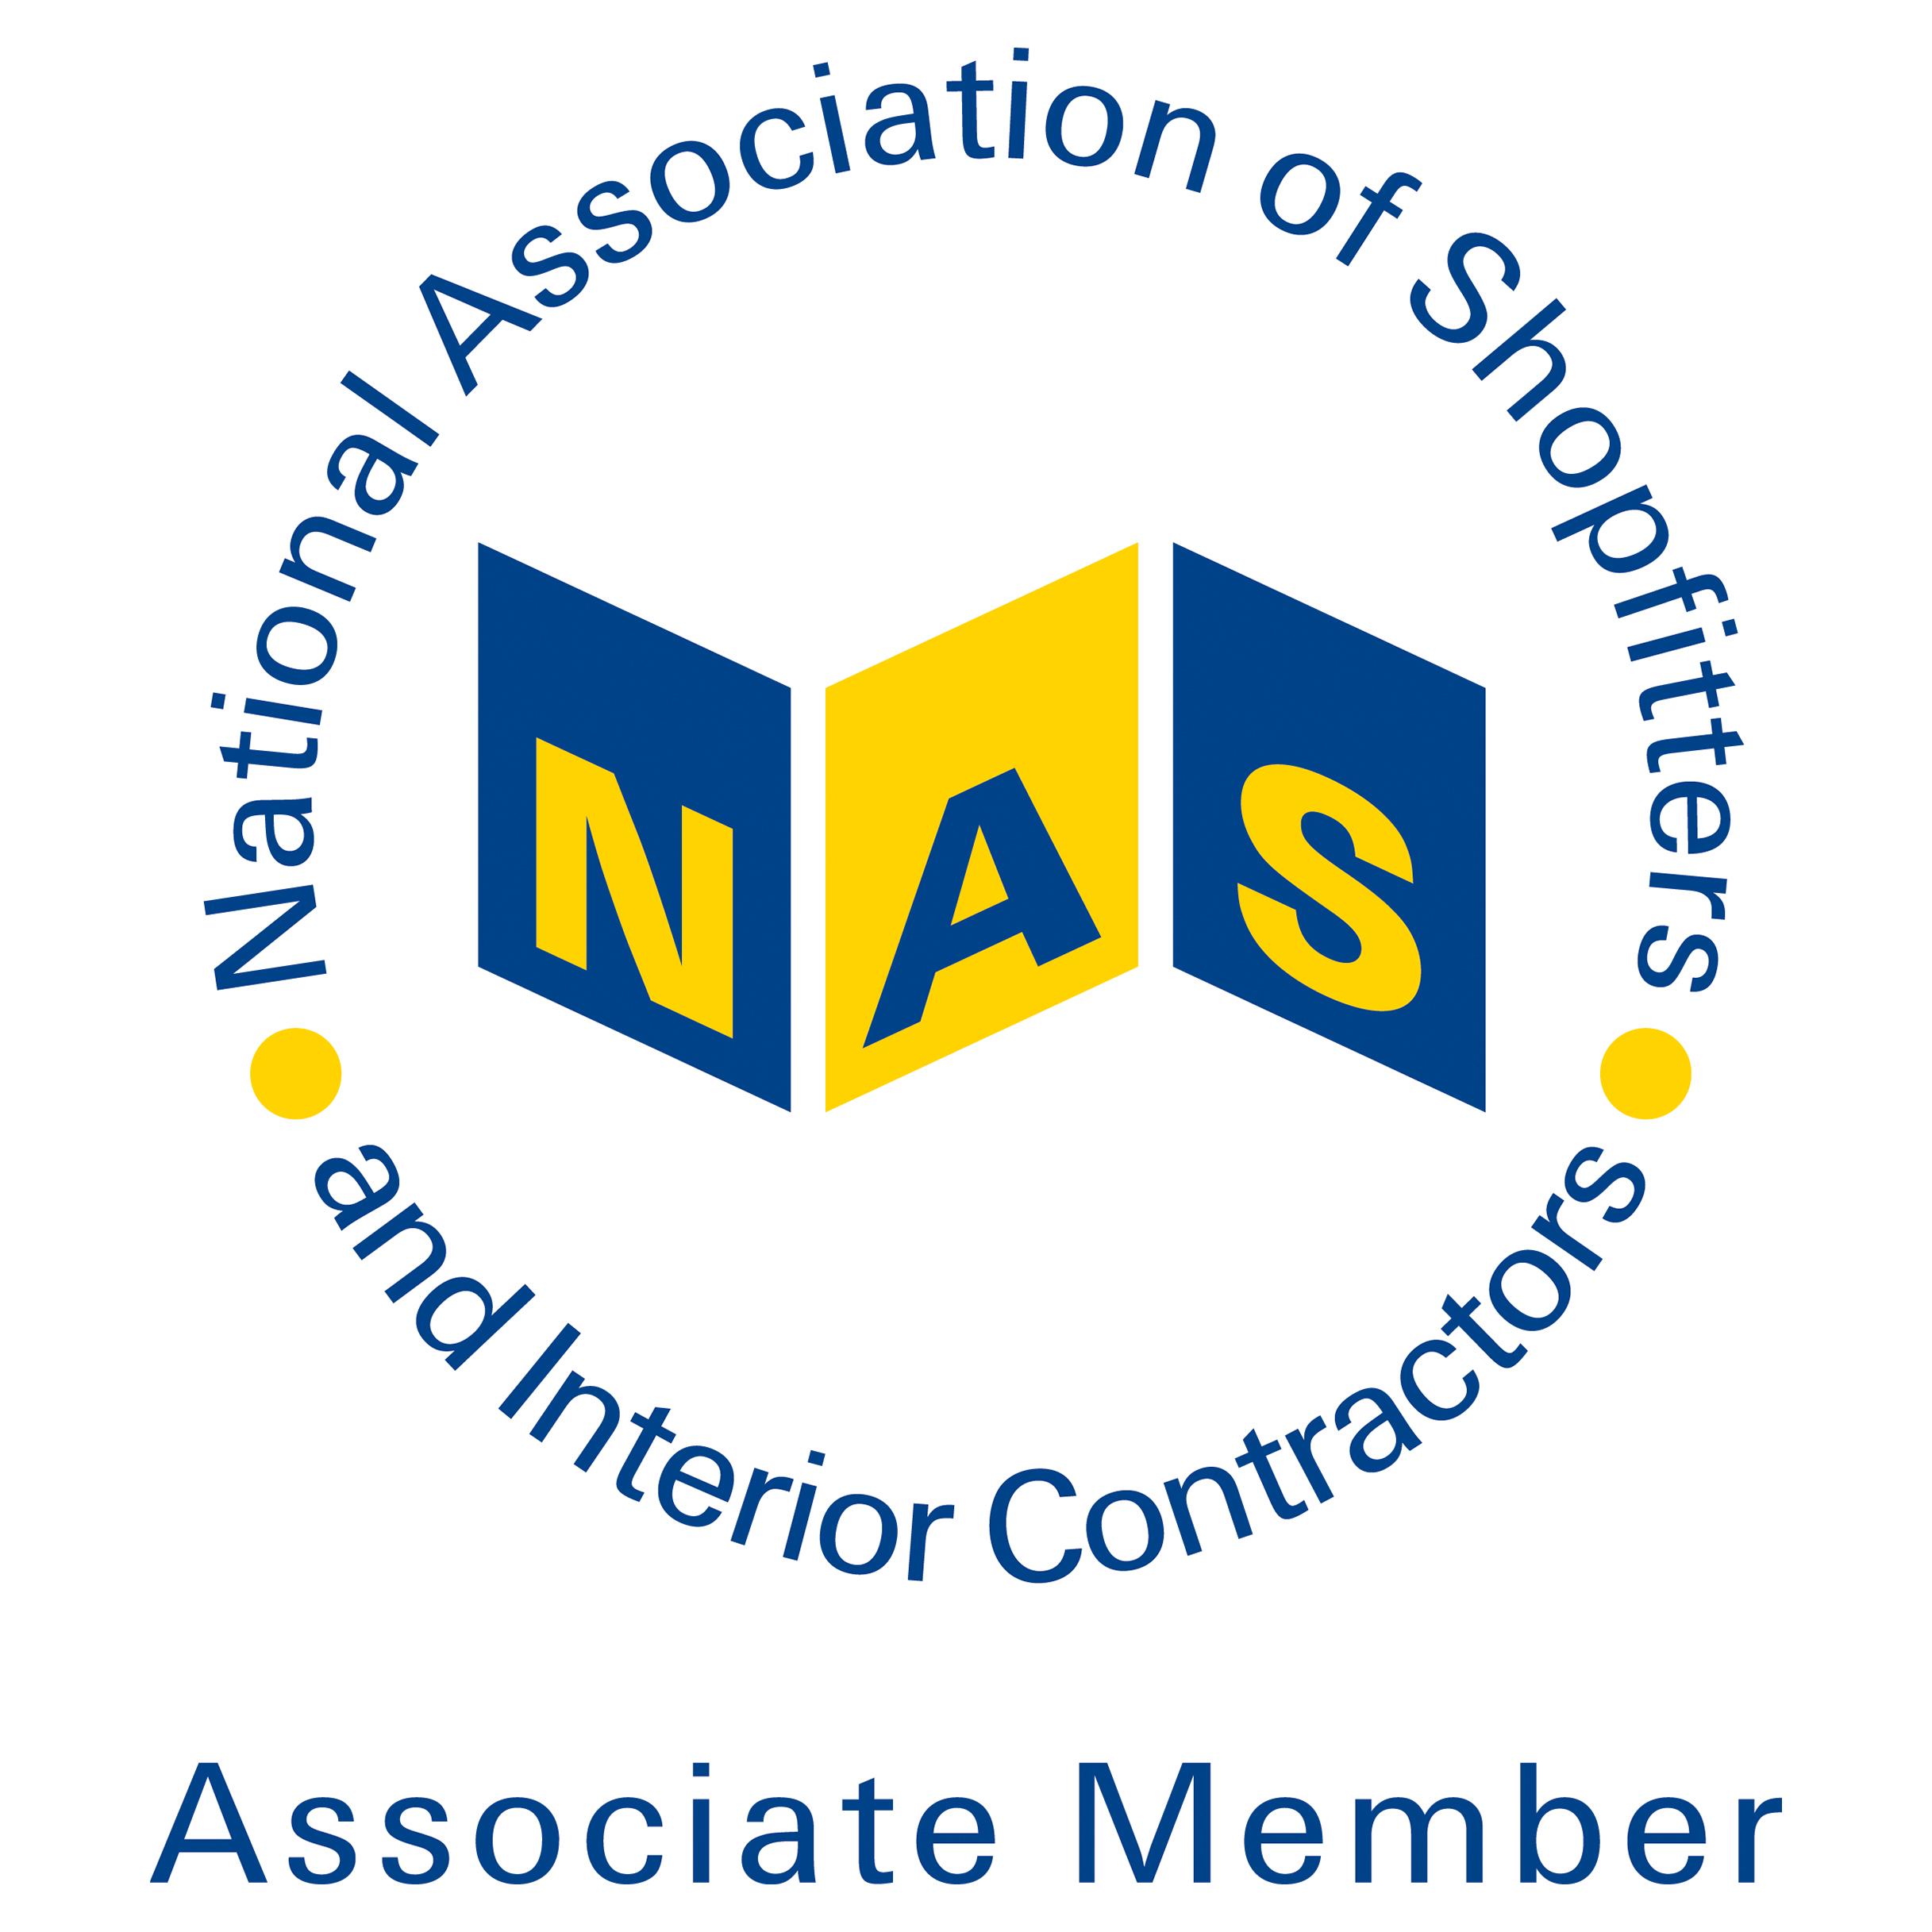 NAS - National Association of Shopfitters and interior contractors - Associate Member